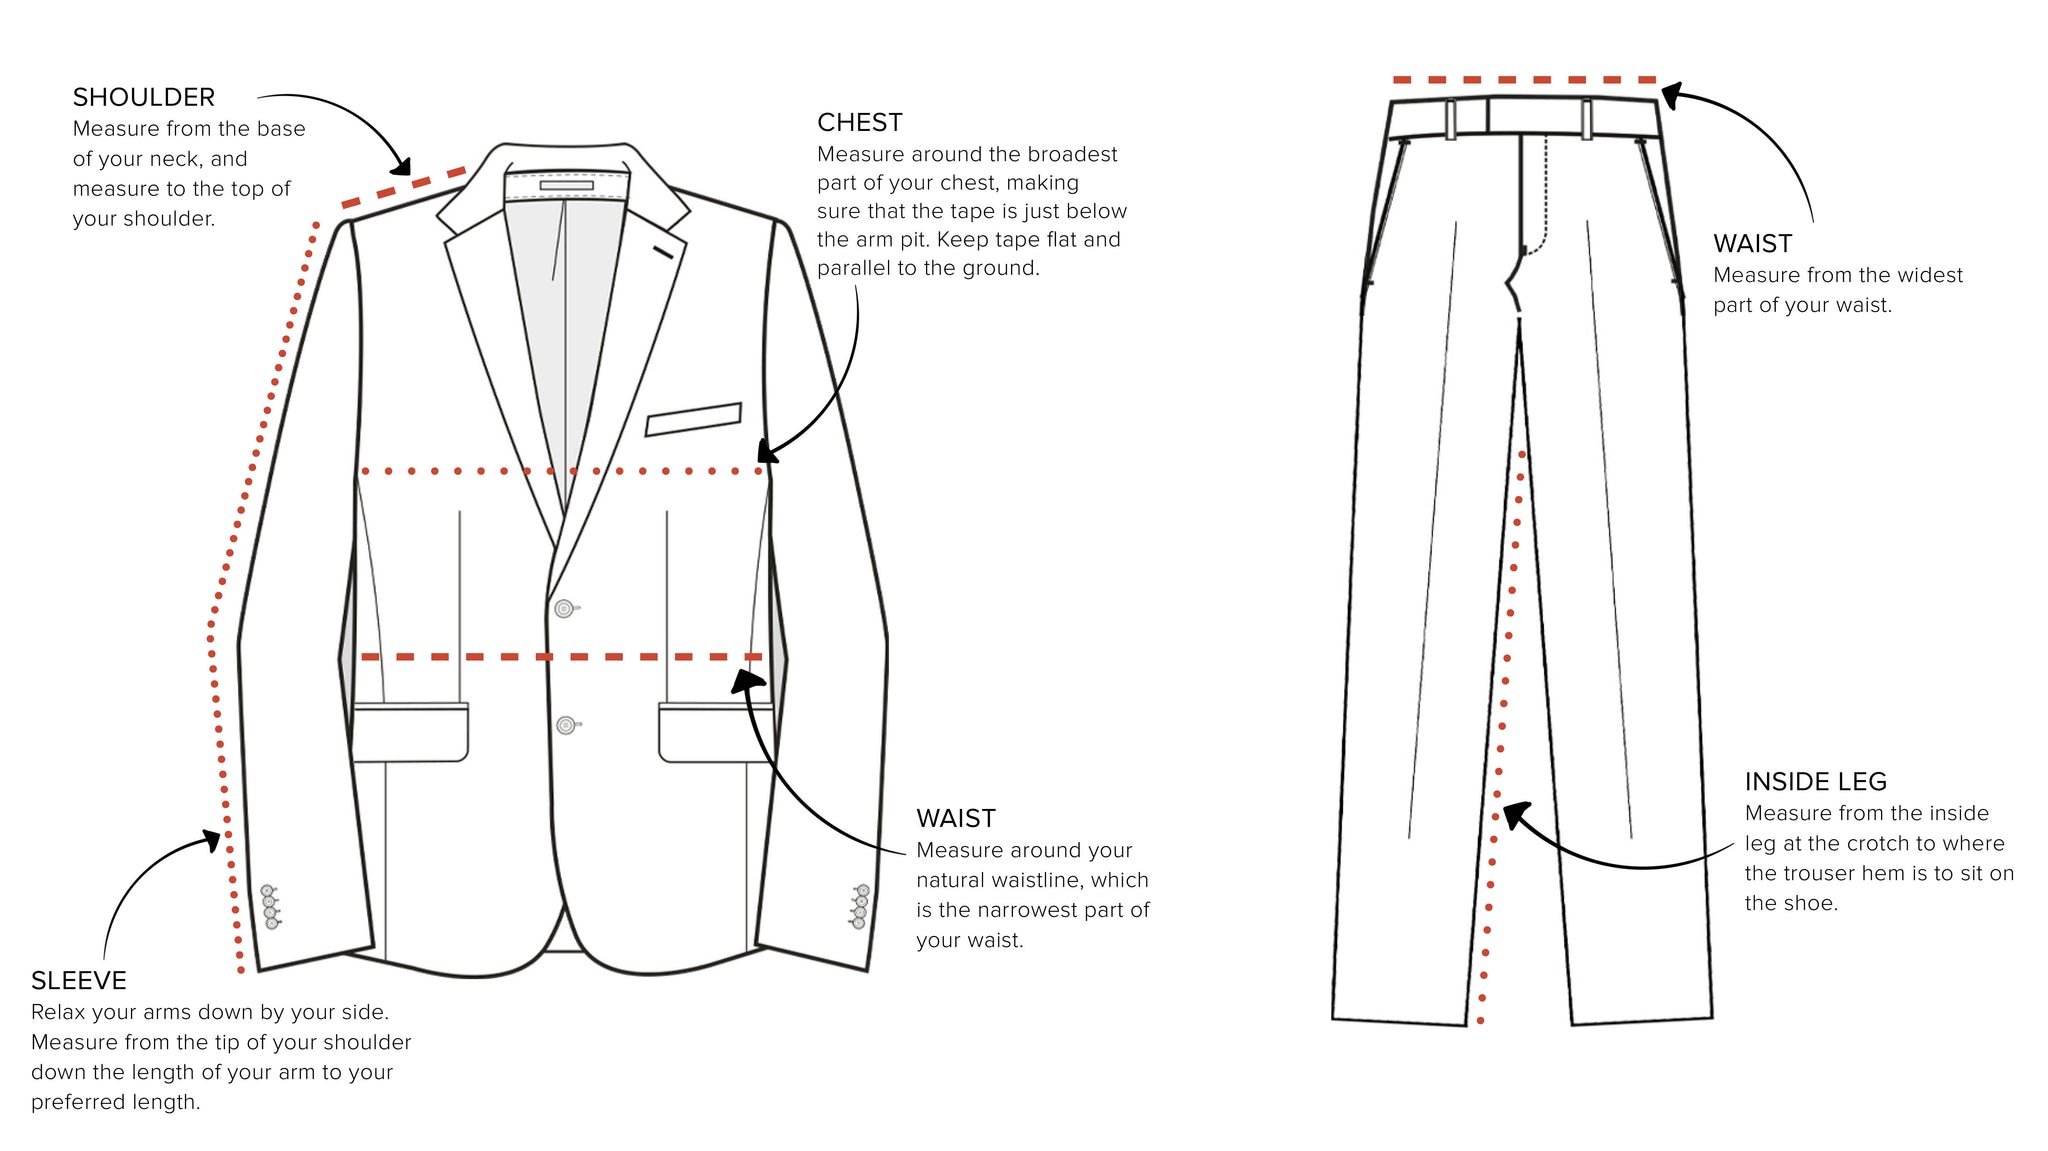 How to measure your Hosn – suit pants & jacket measurement guide